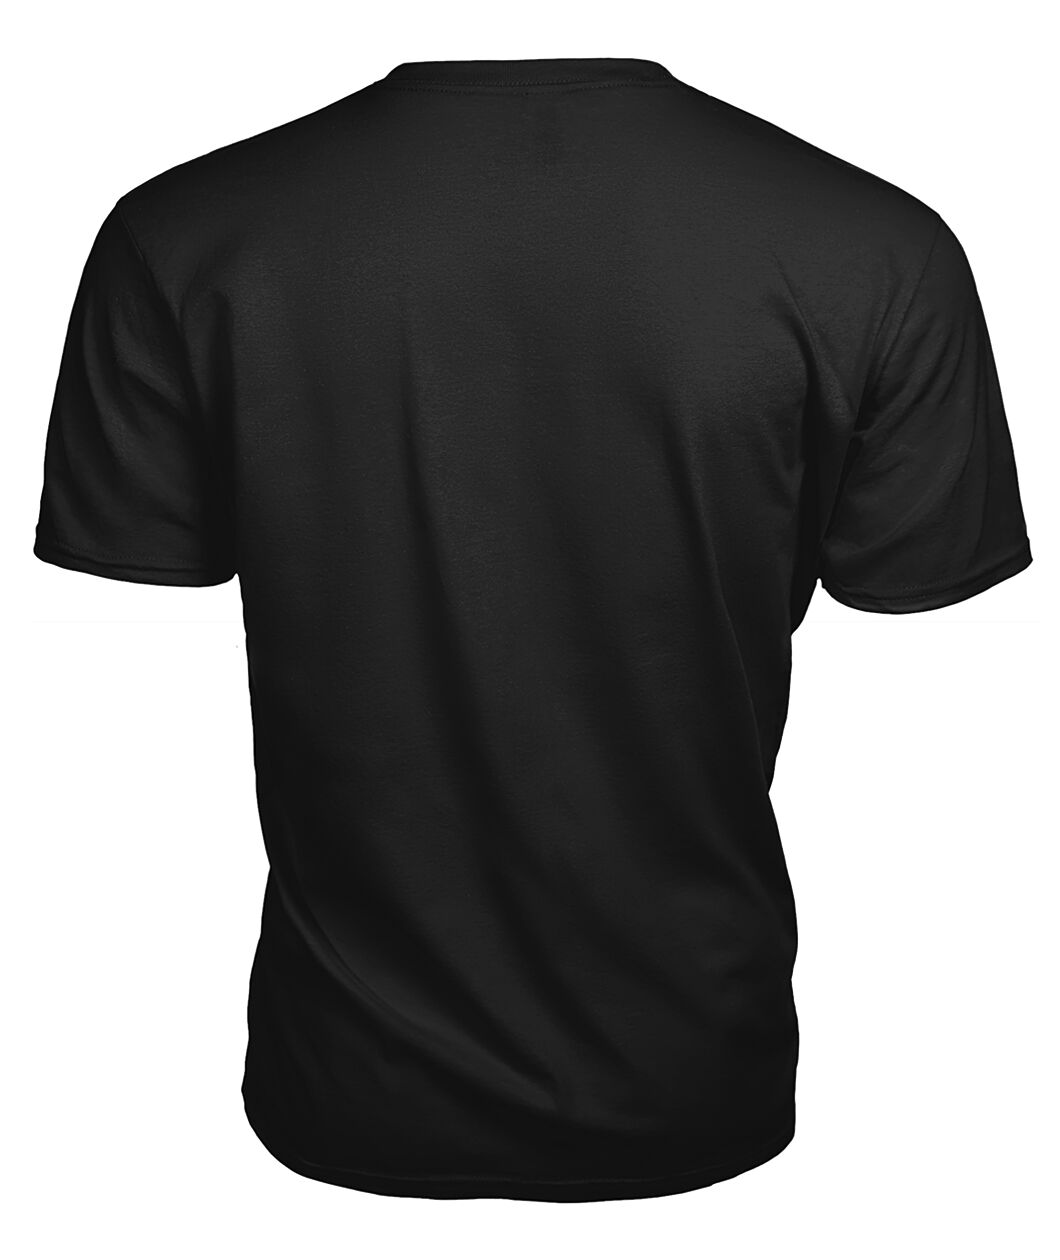 Blane Family Tartan - 2D T-shirt